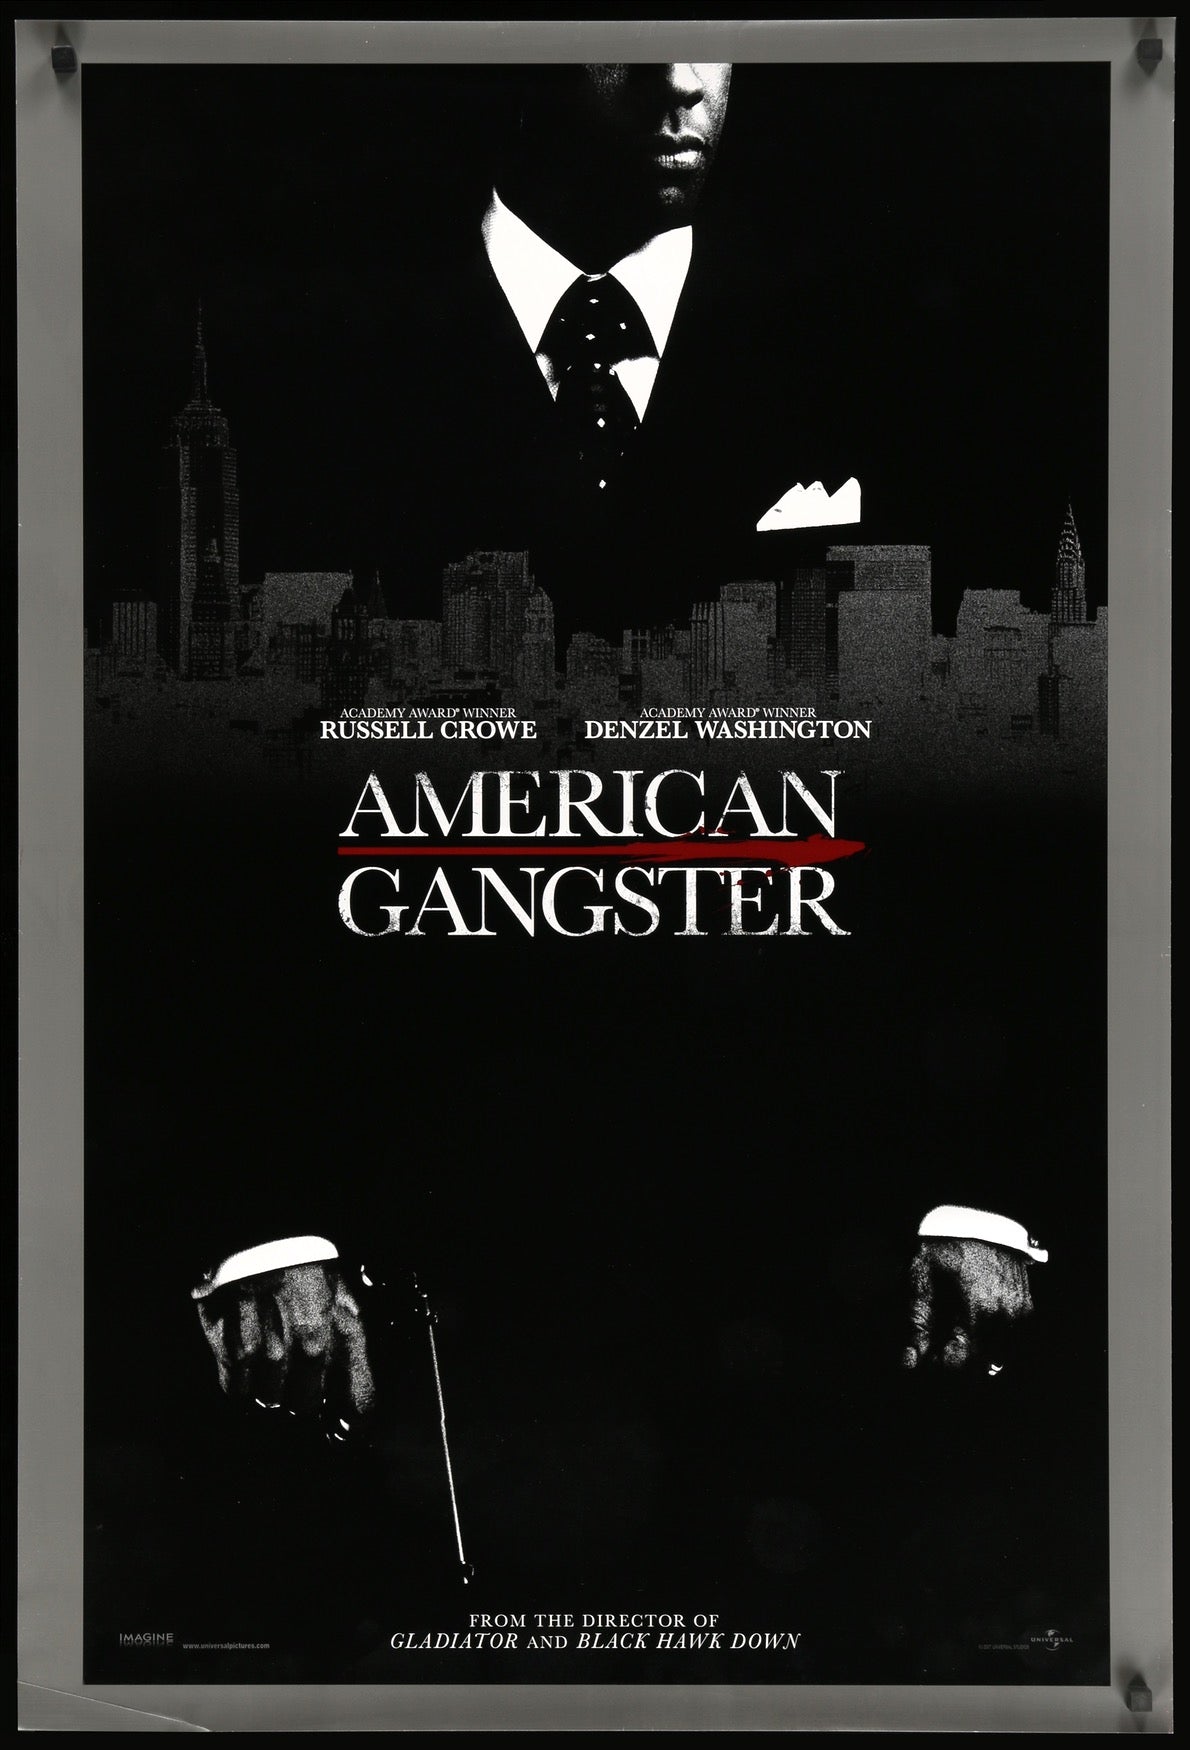 American Gangster (2007) original movie poster for sale at Original Film Art